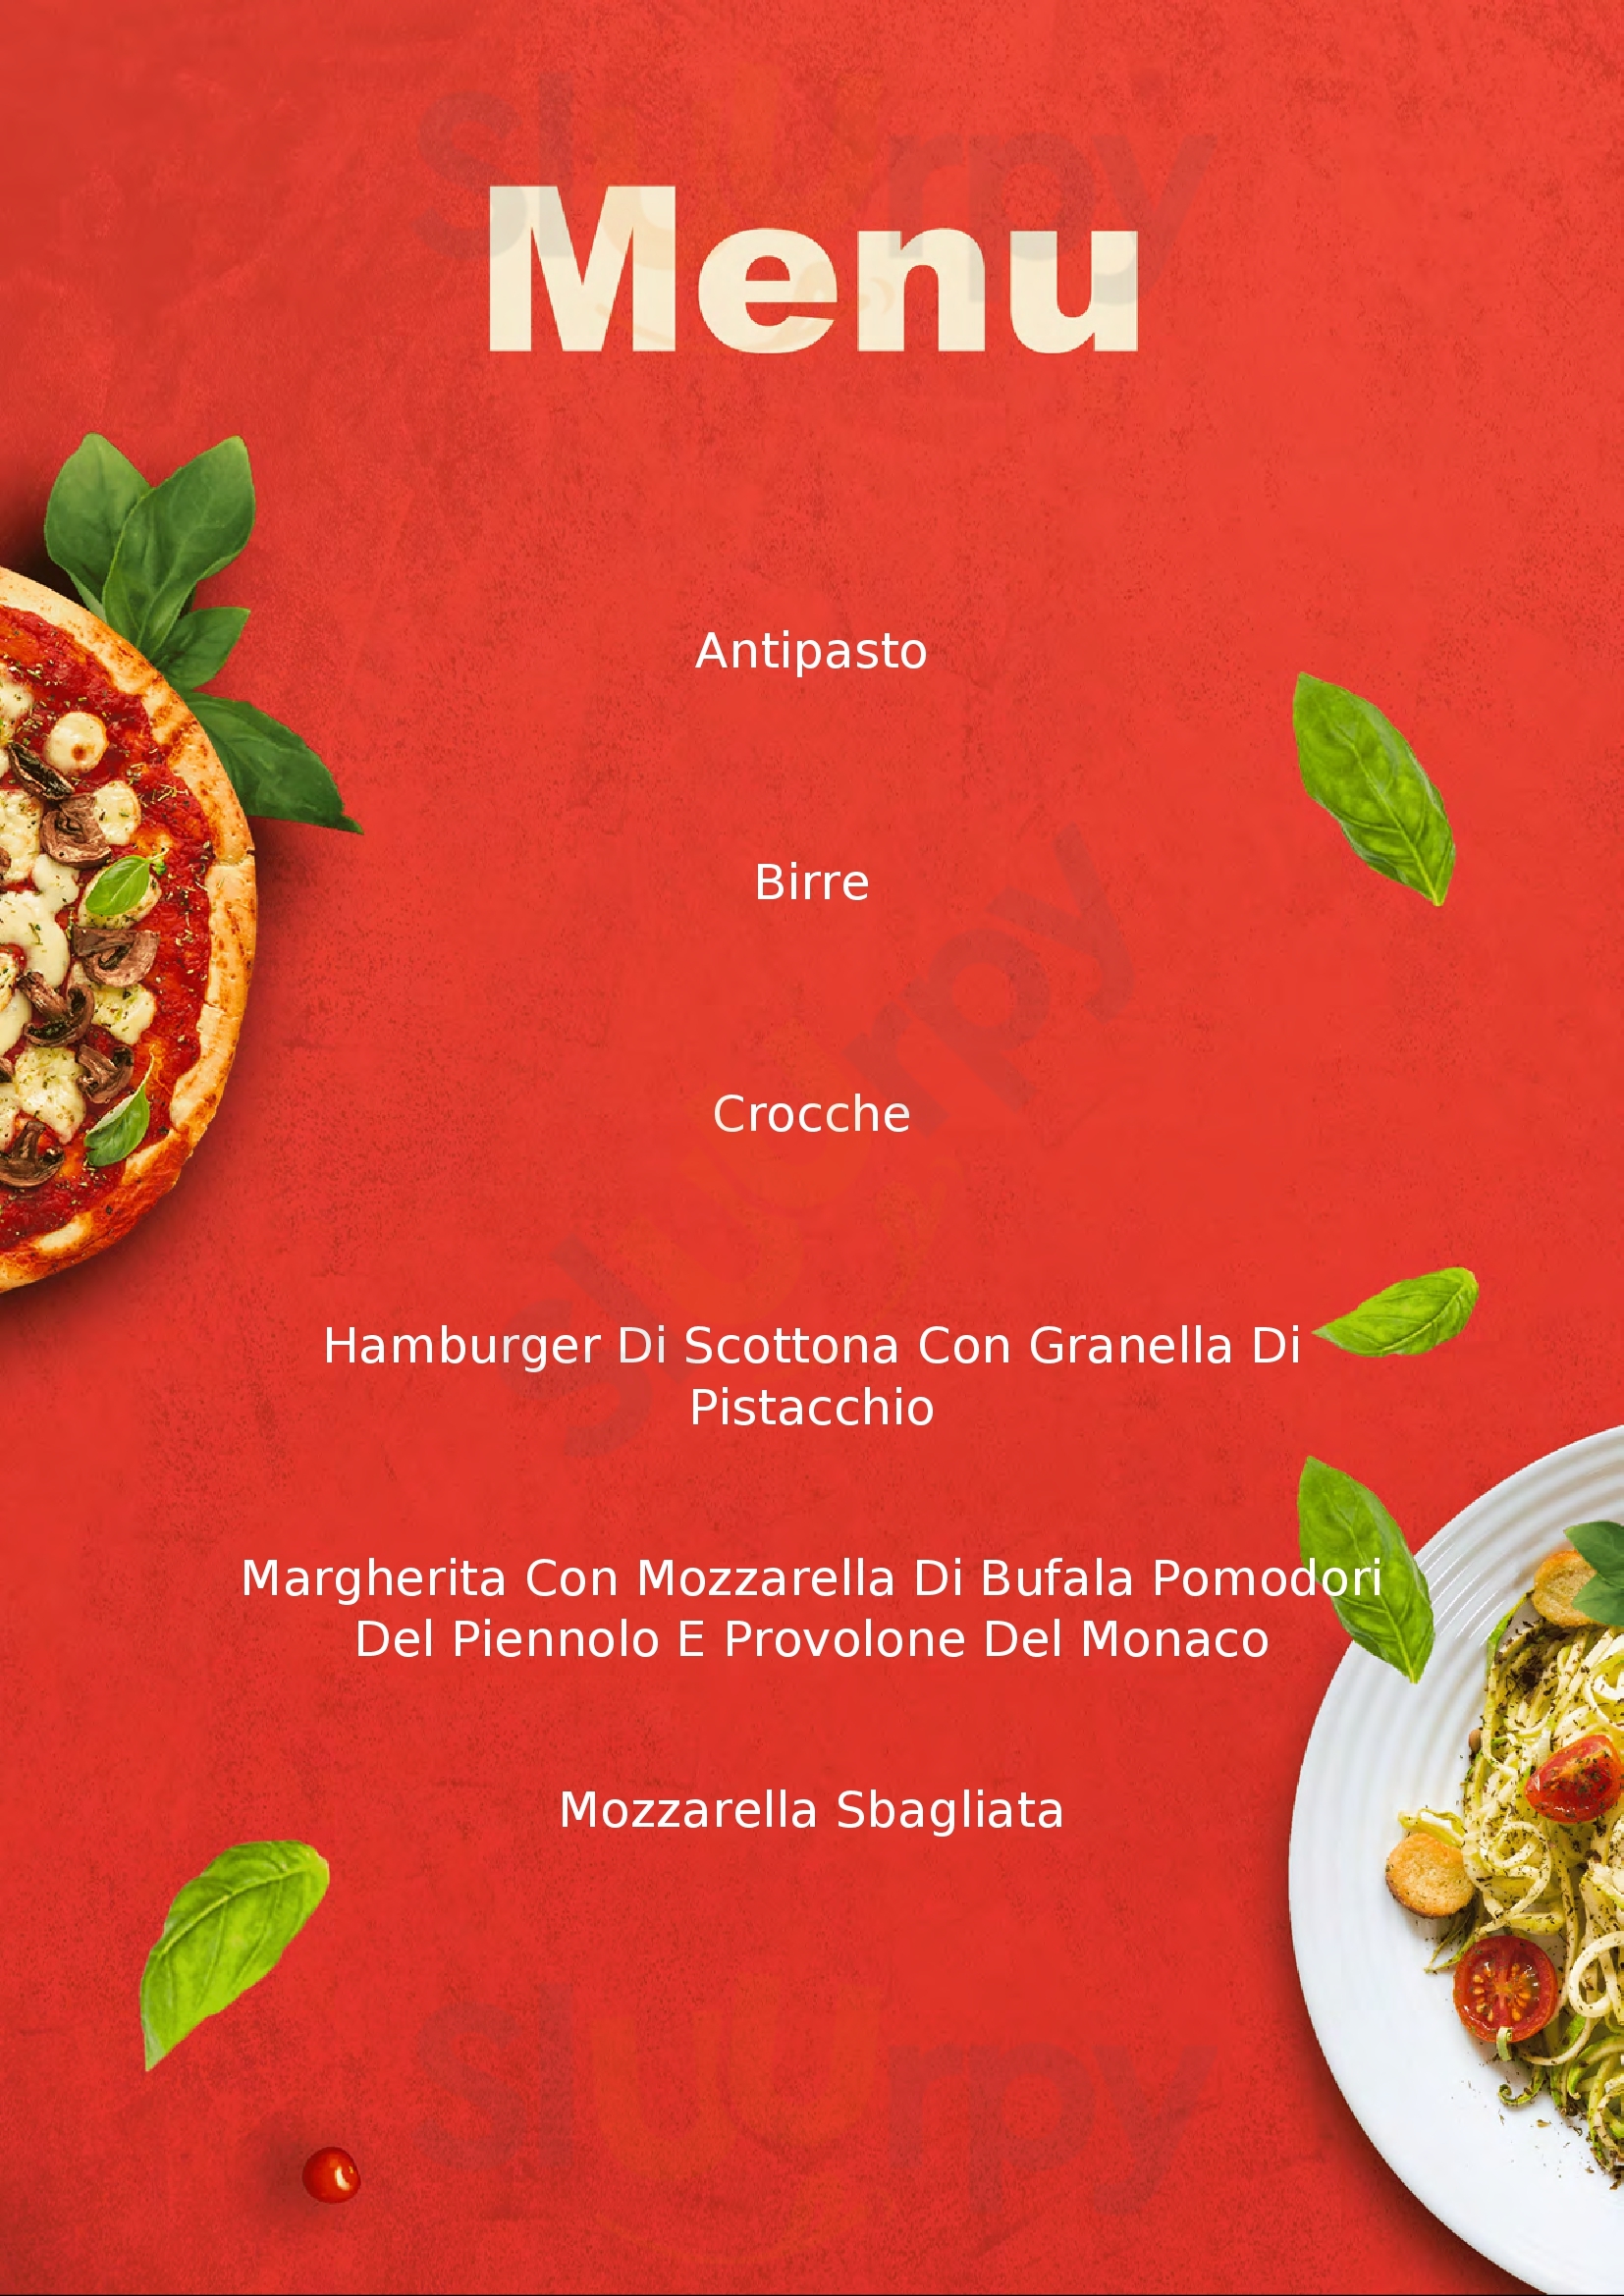 Ristorante braceria pizzeria Zona 13 Caserta menù 1 pagina